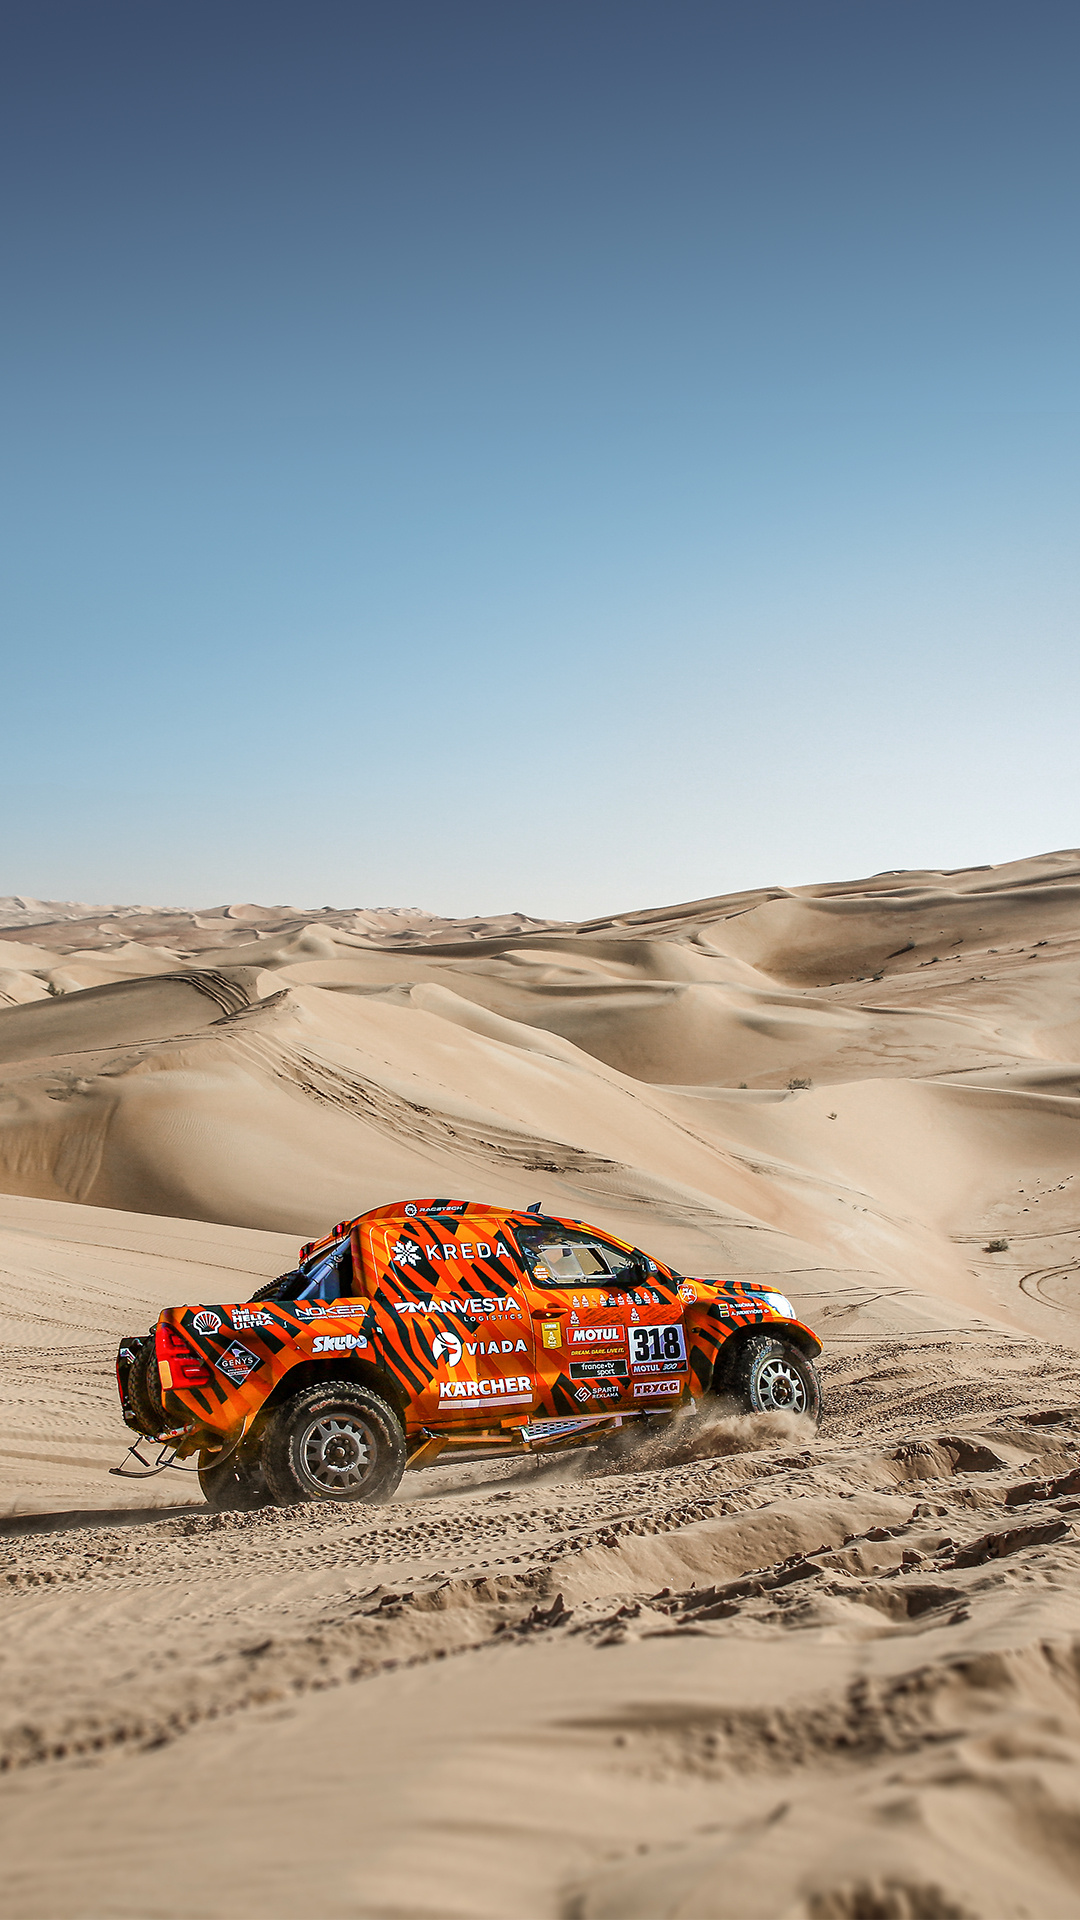 Dakar Rally: 2018 Toyota Hilux, Dakar car, Team Lithuania, Drivers: Antanas Juknevicius. 1080x1920 Full HD Wallpaper.